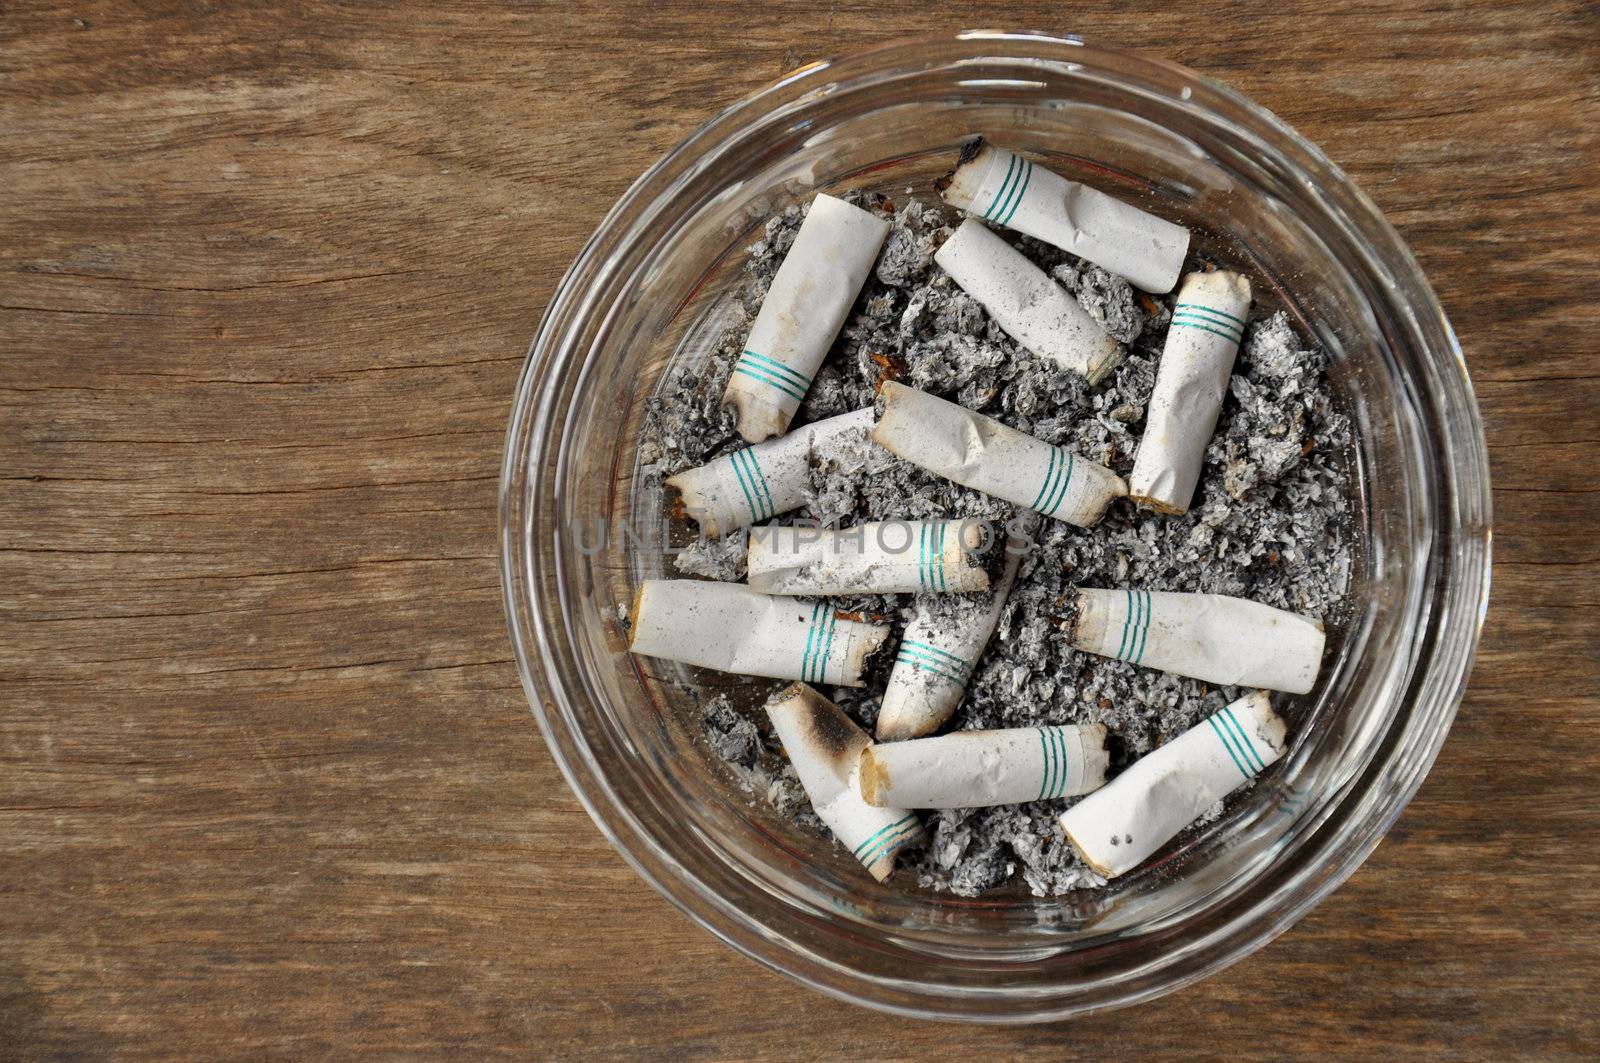 Cigarette butts in a glass ashtray.